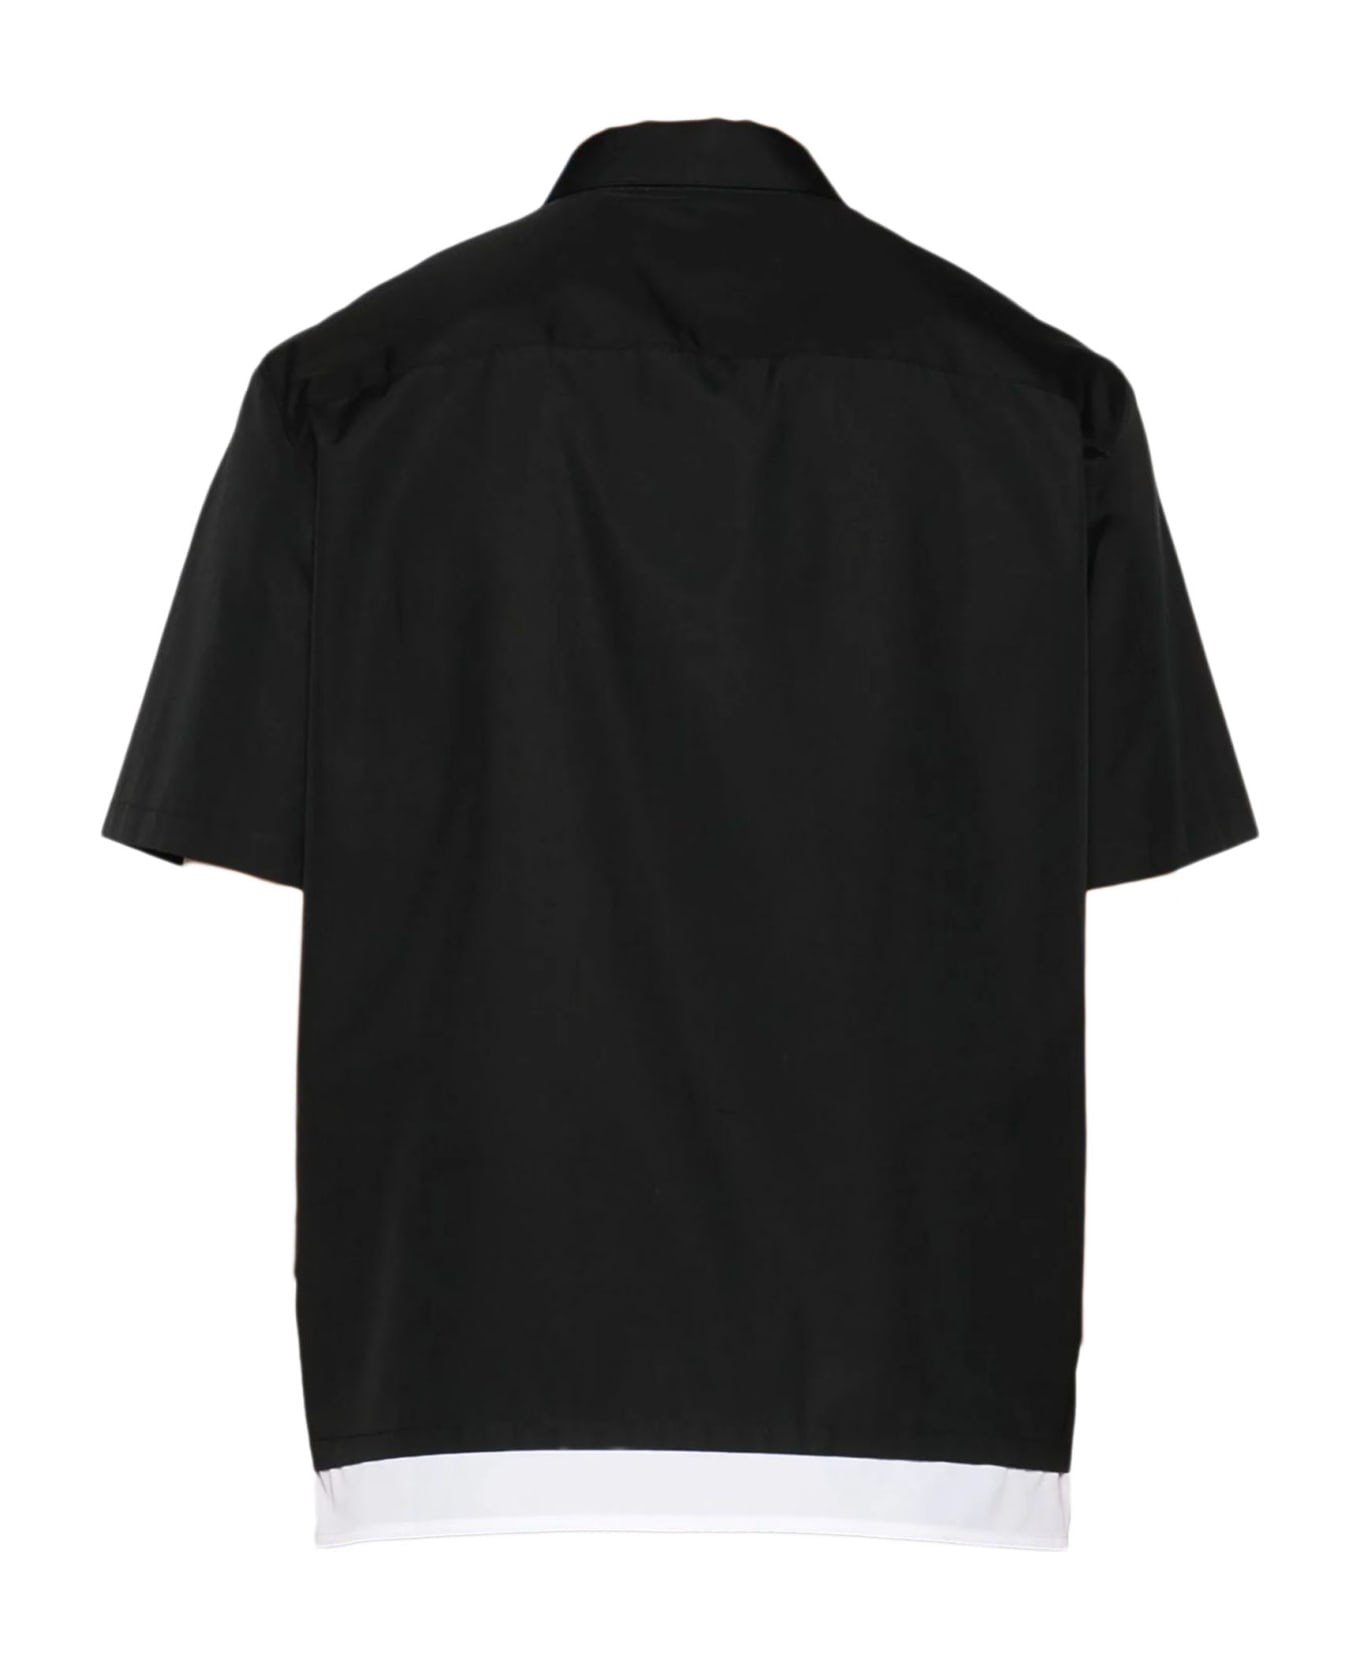 Neil Barrett Shirts Black - Black シャツ